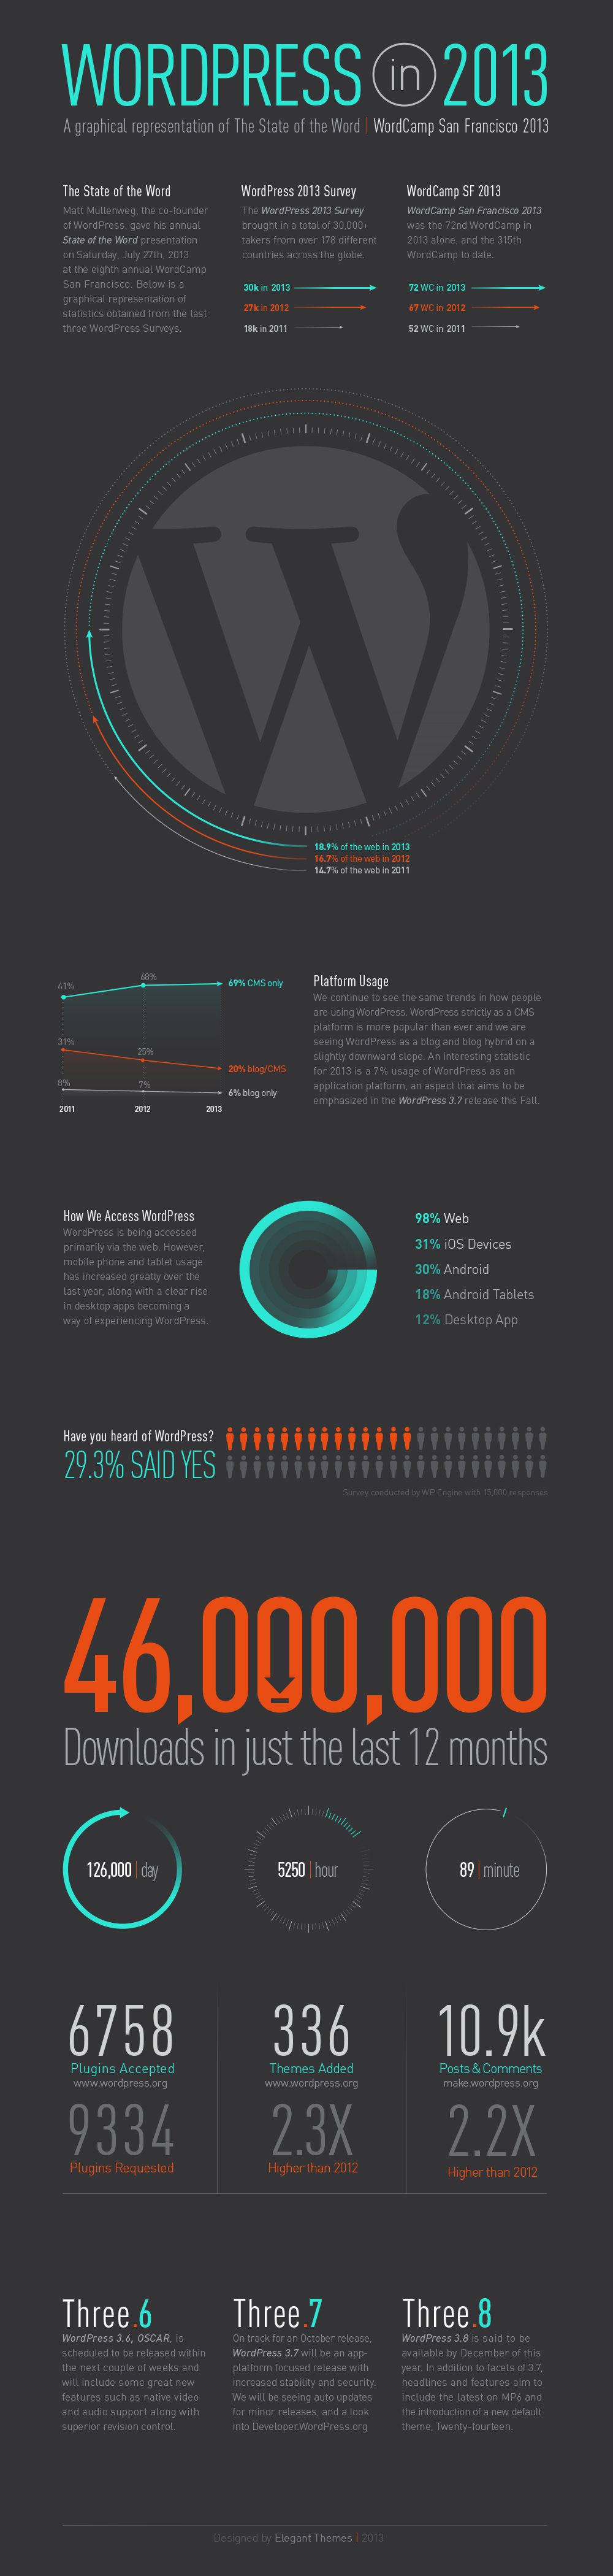 WordPress Infographic For 2013